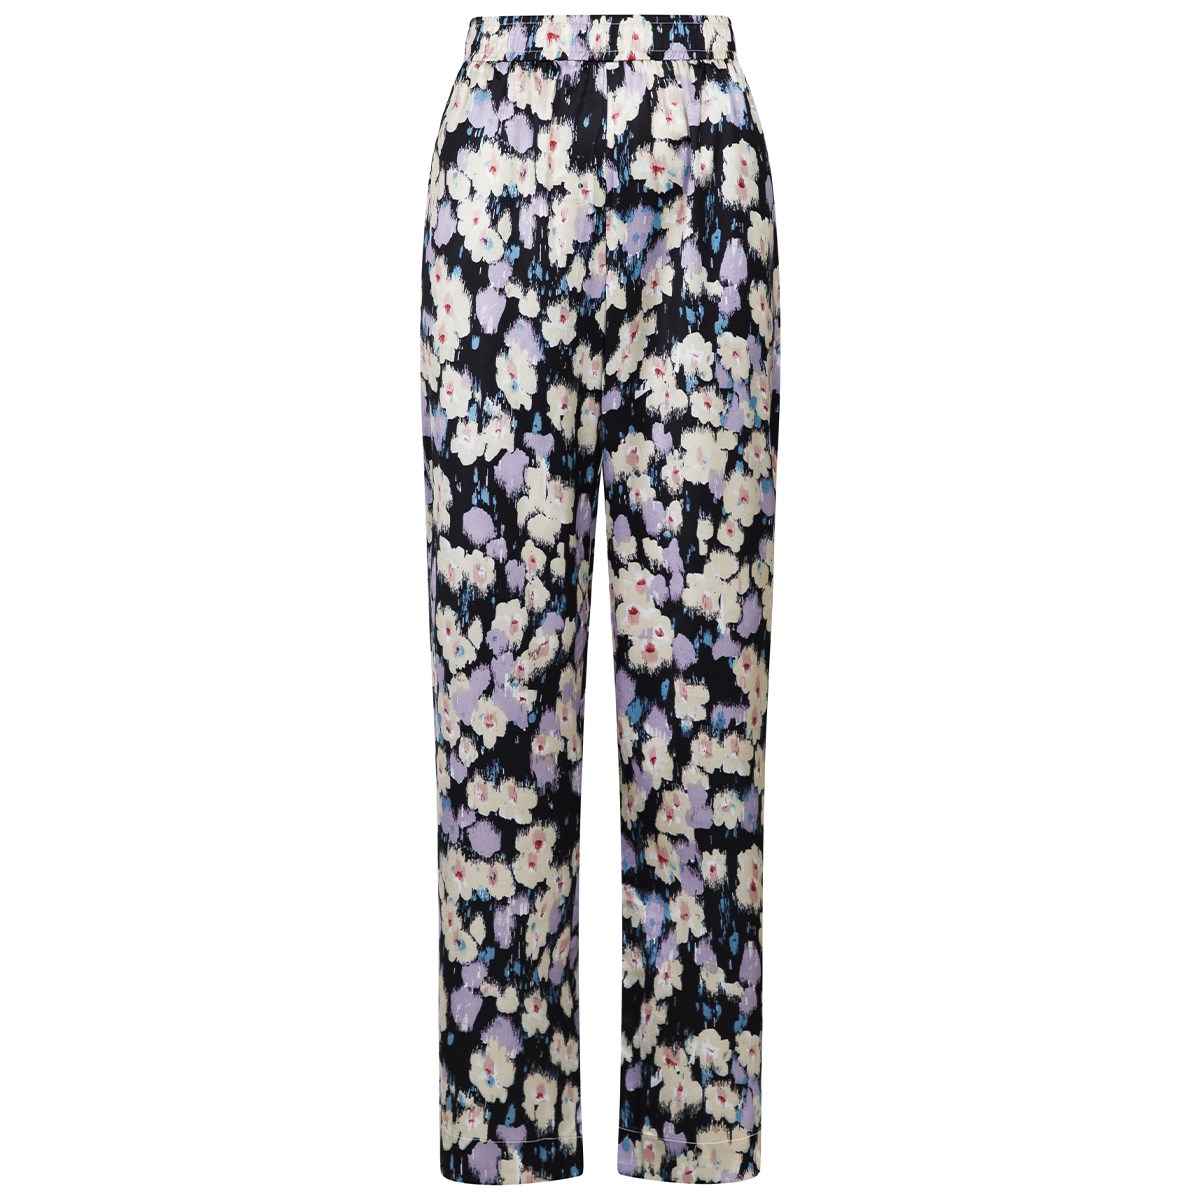 Neo - Astra Graphic Botanic Pants Lavender